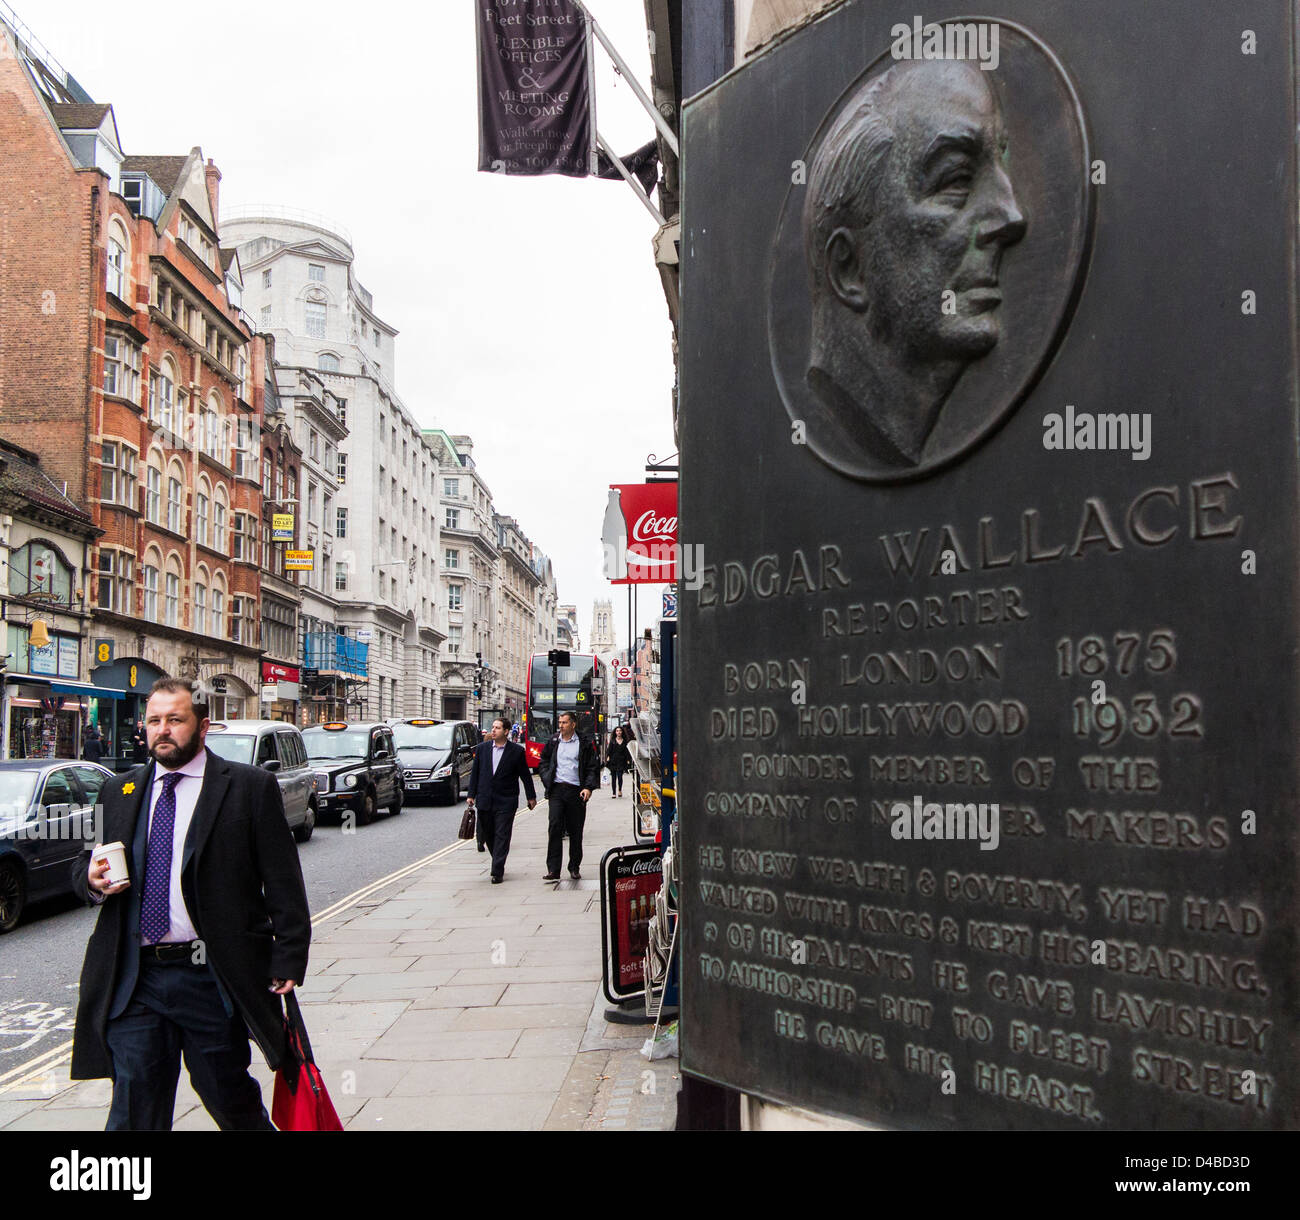 Edgar Wallace memorial plaque in Fleet Street, London, England Stock Photo